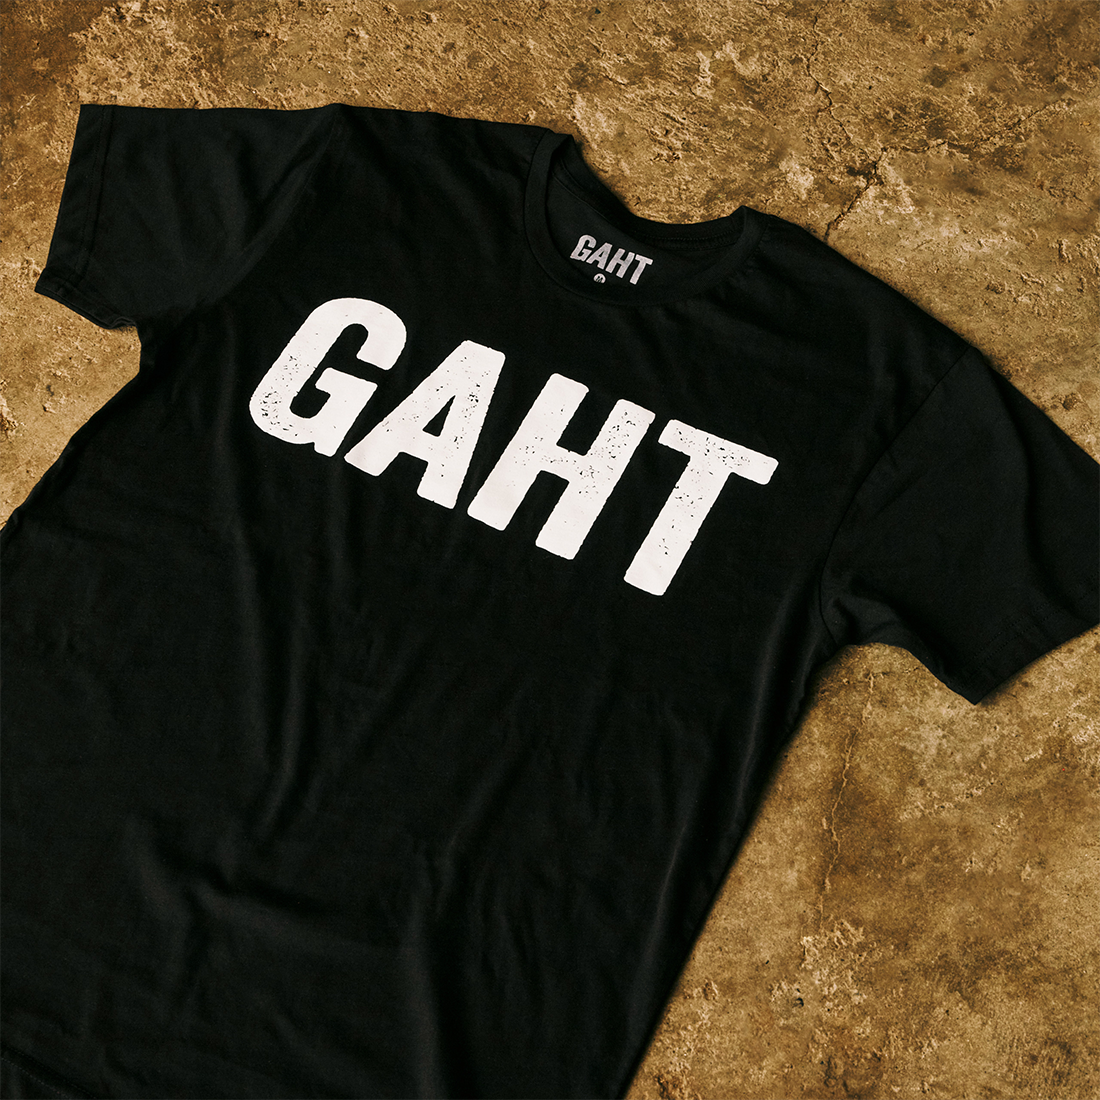 GAHT T-Shirt Product Shot 2